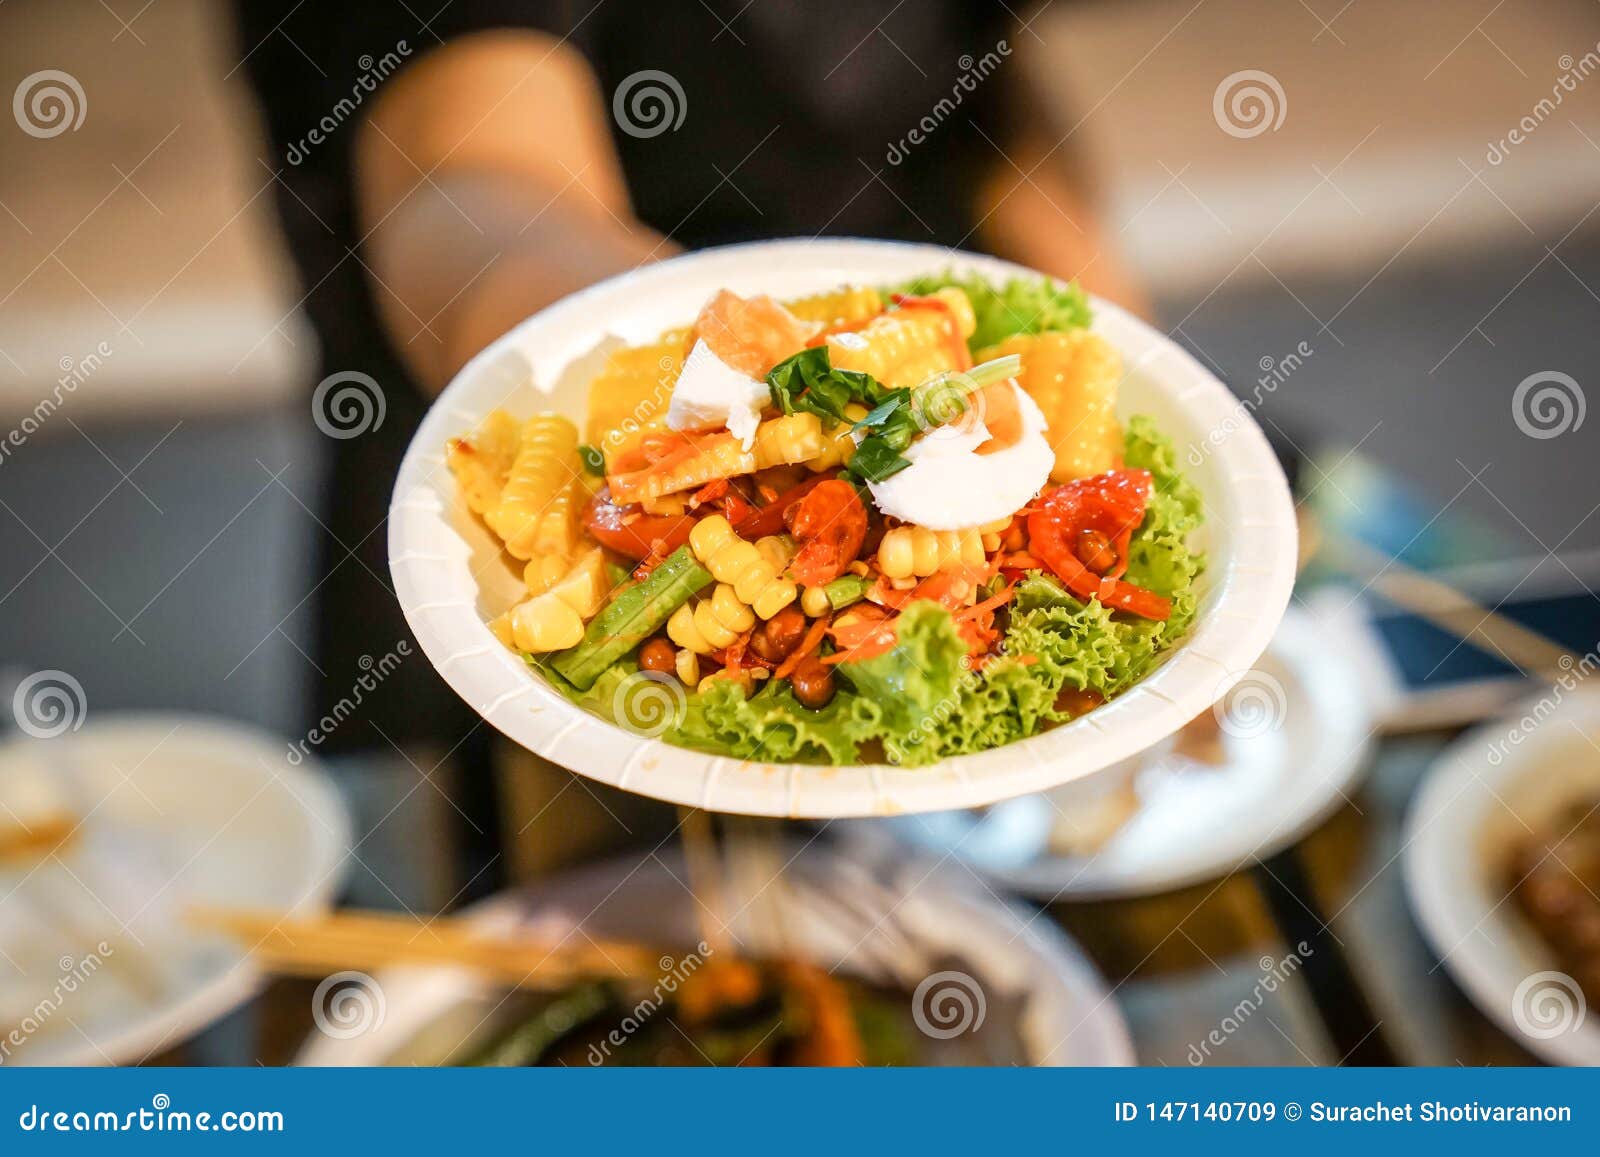 somtum; spicy papaya salad with boiled corn in paper dish at foodtruck street food event., bangkok, thailand